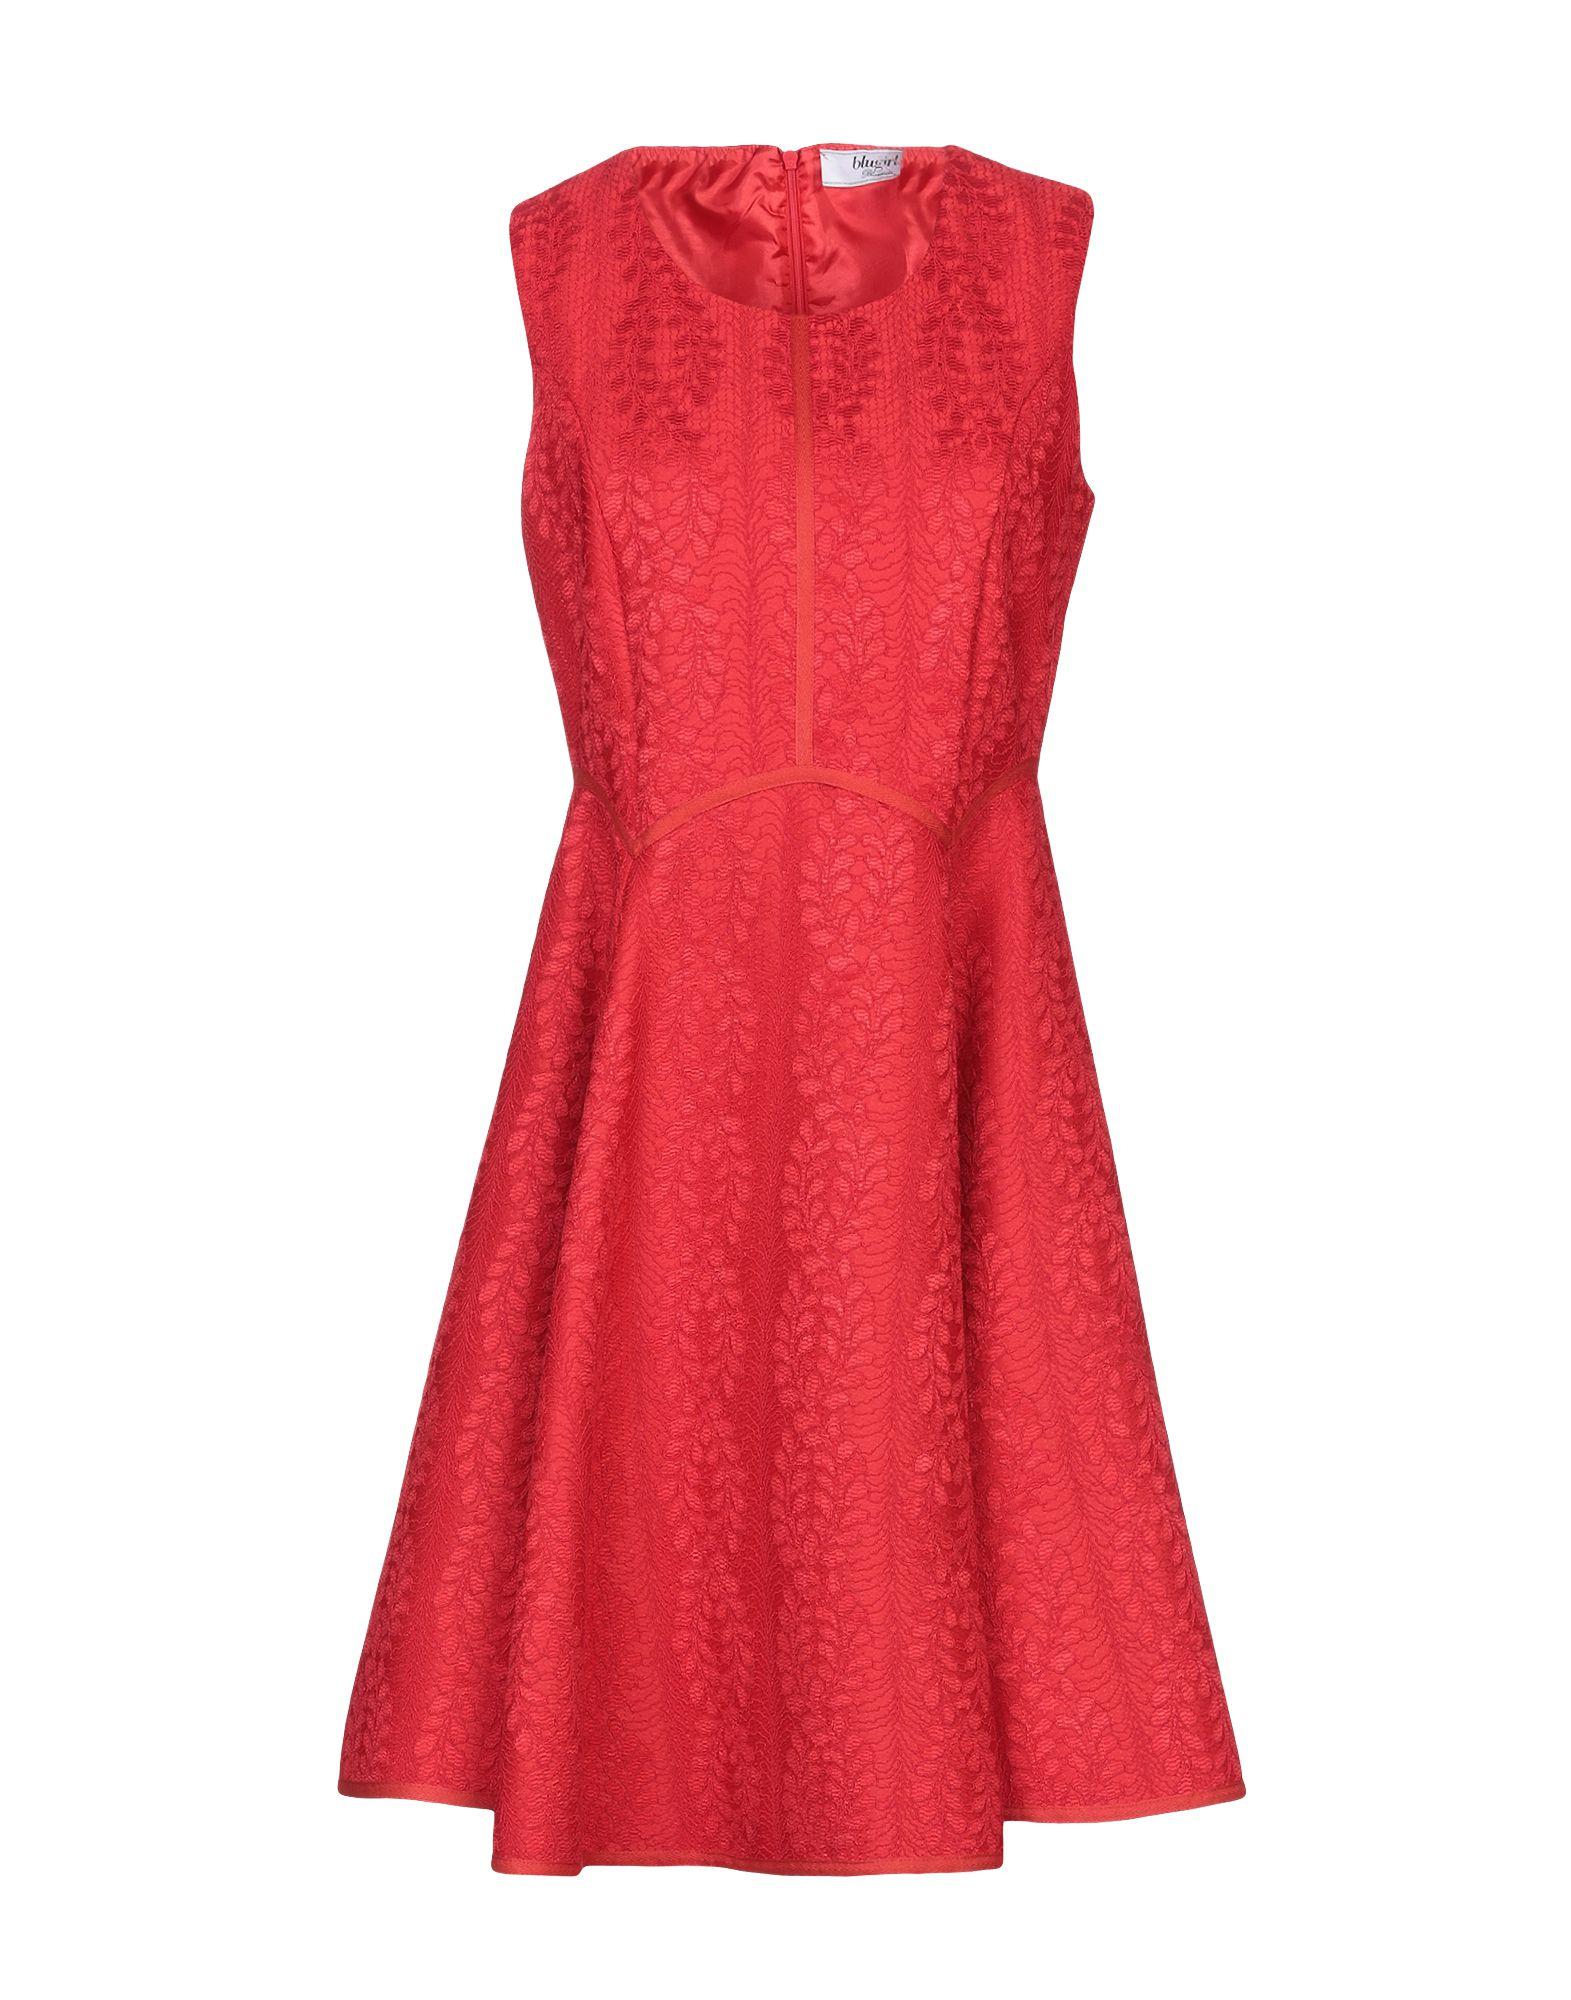 Blugirl Blumarine Short Dress in Red - Lyst